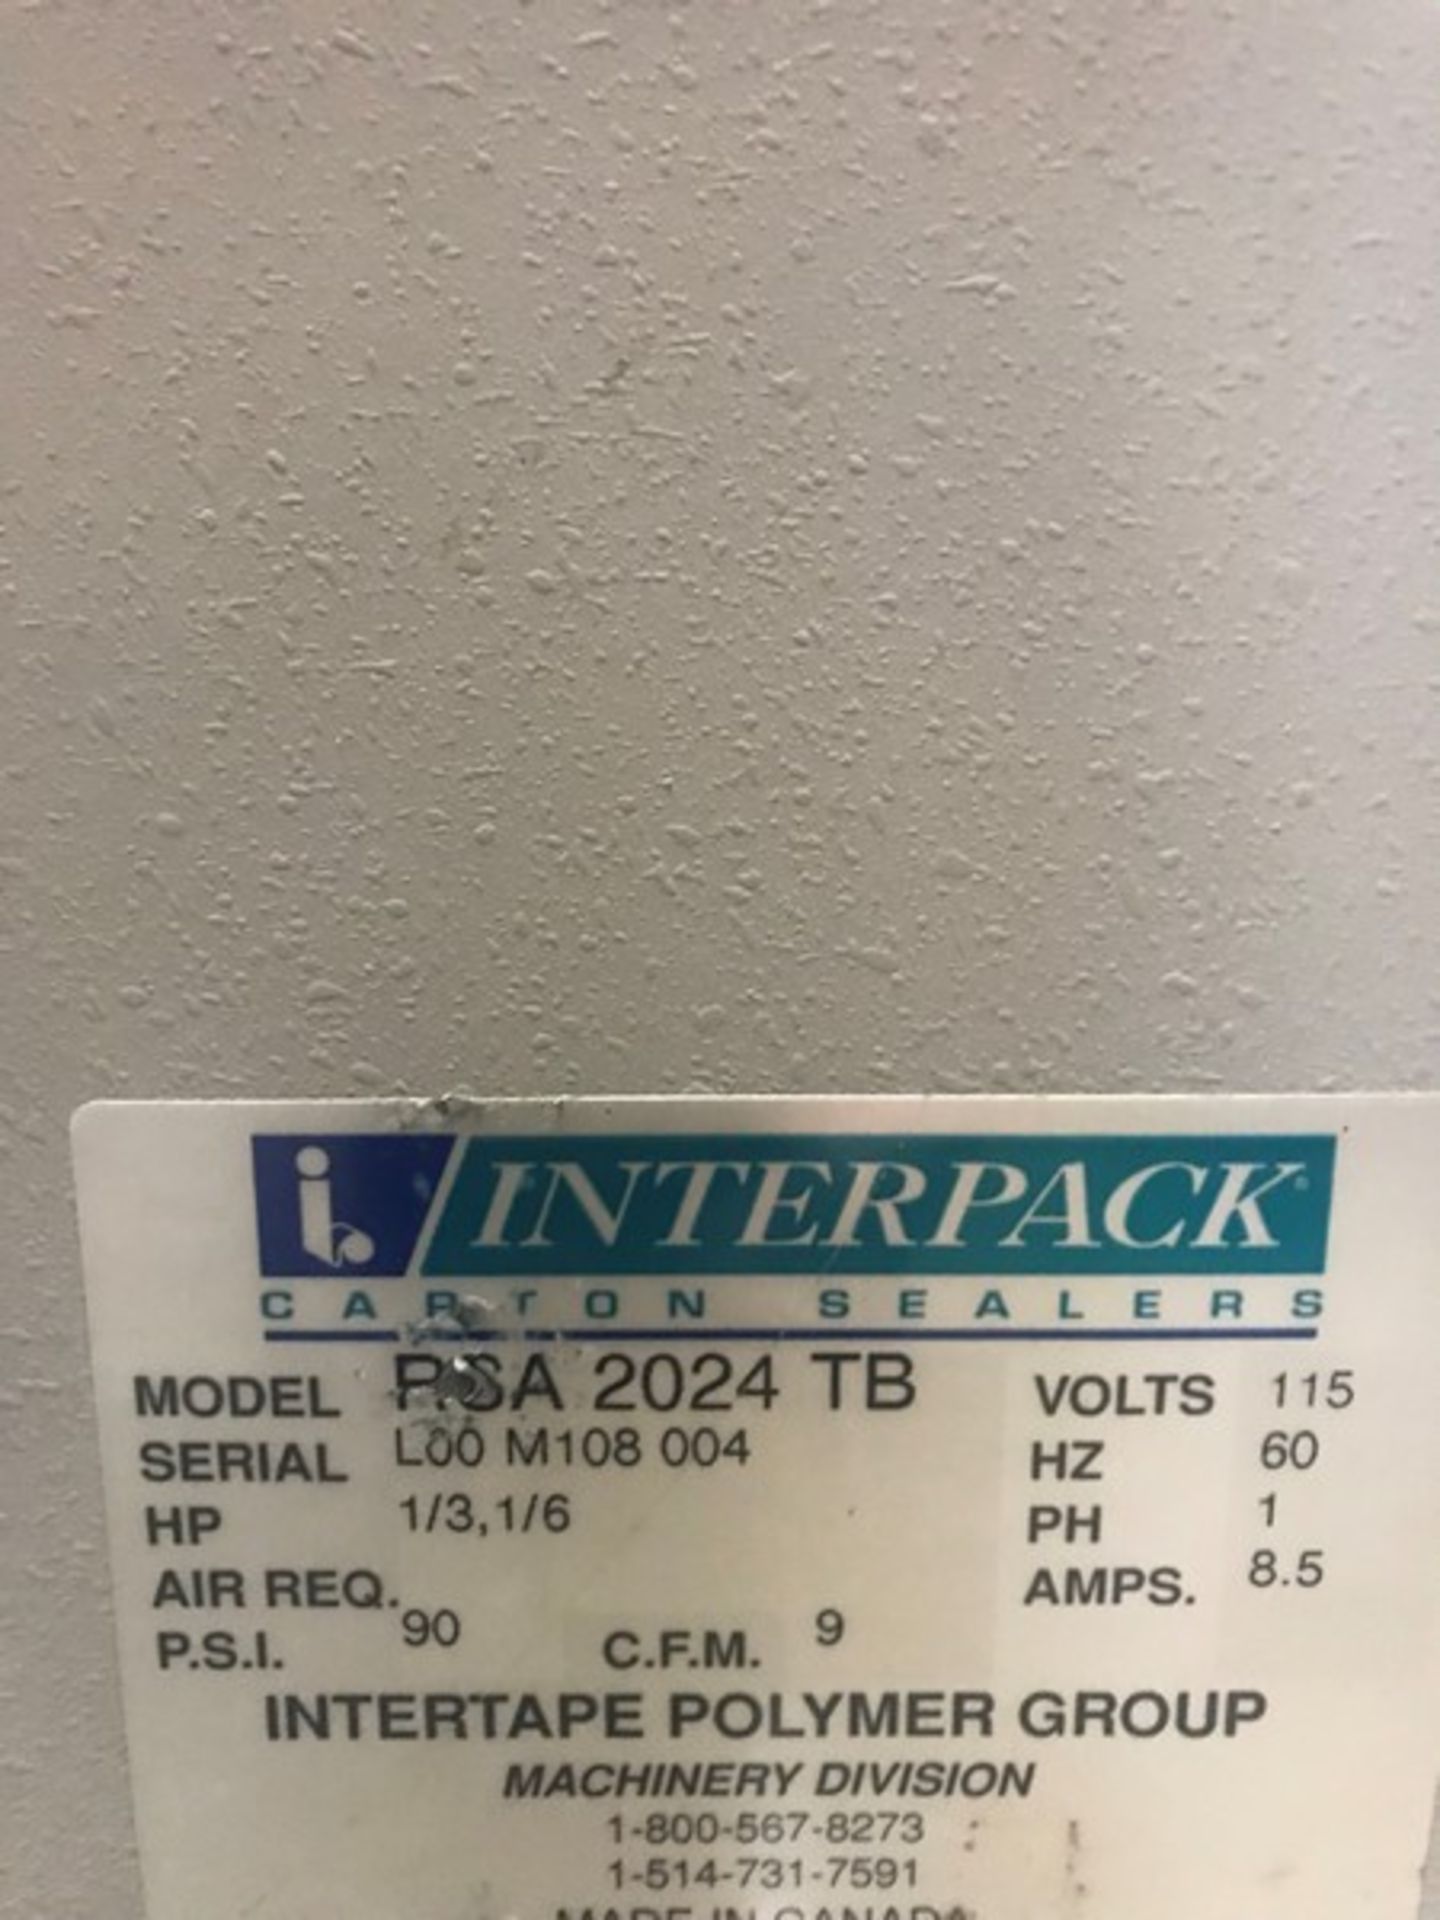 Interpack Carton Sealer, Model RSA2024TB, S/N L00M108-004, HP 1/3 - 1/6; Volt 115, Single Phase, - Image 3 of 3